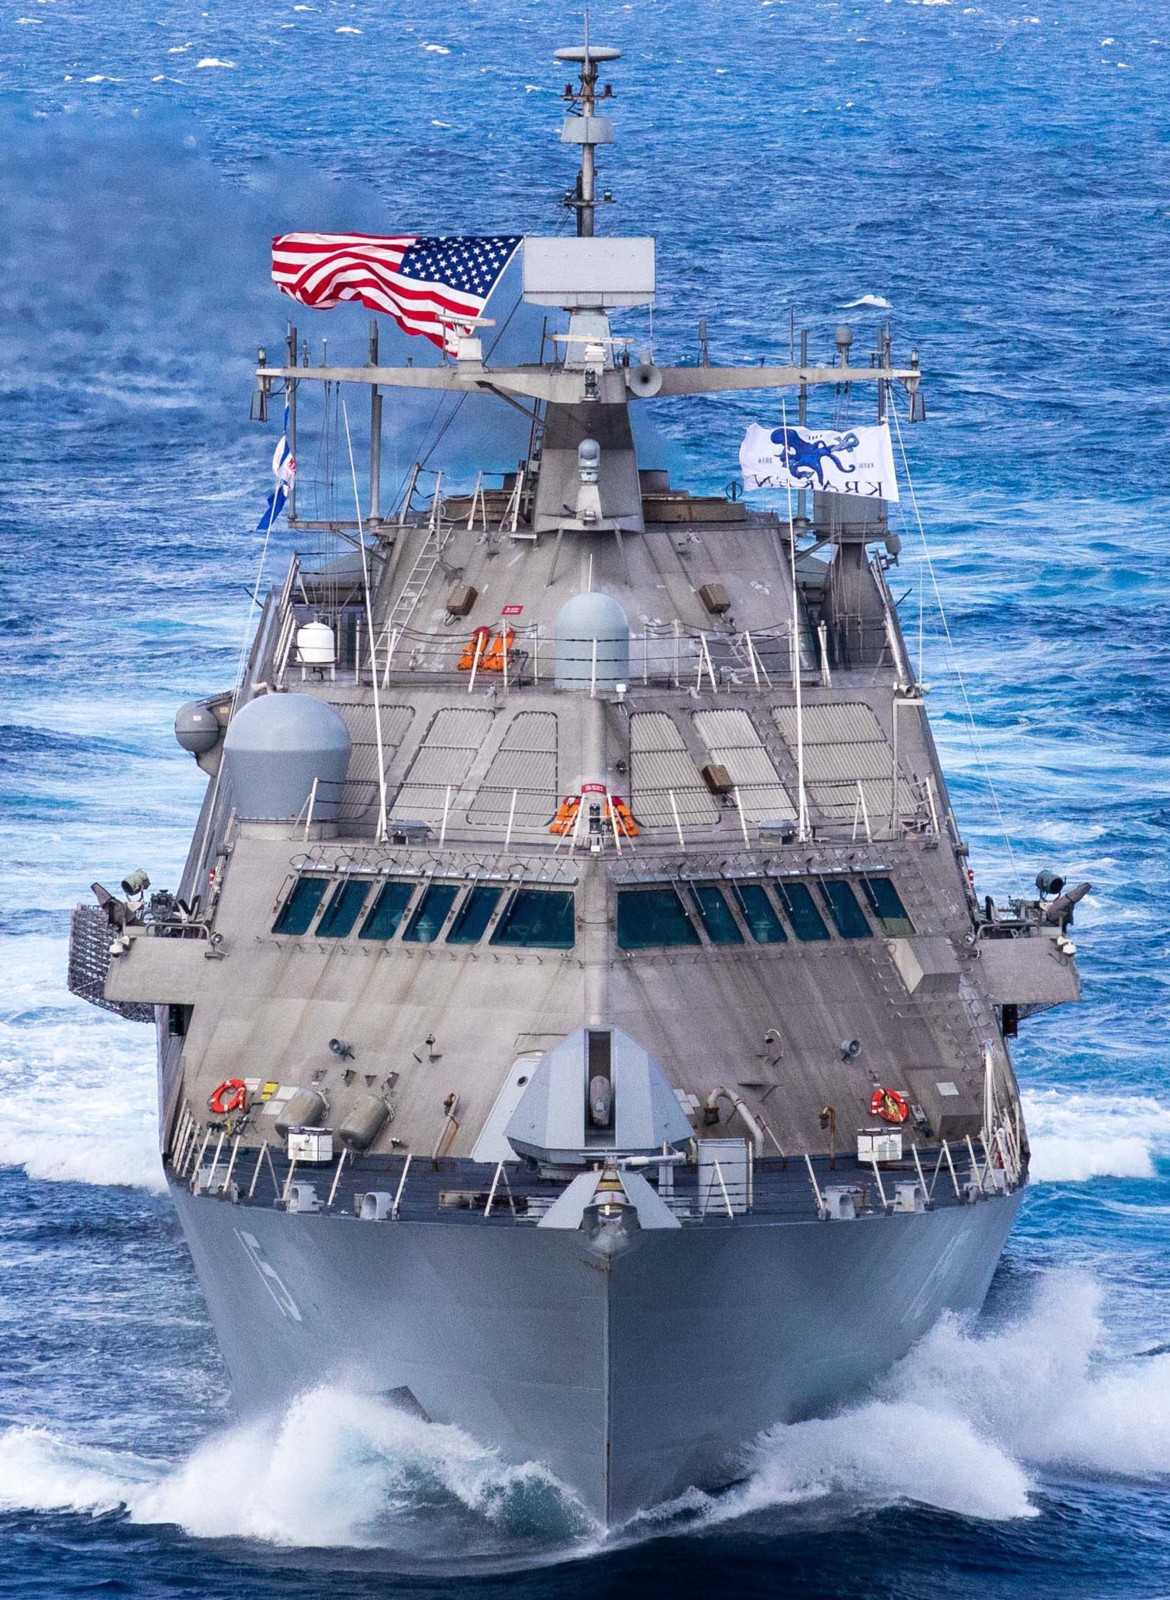 lcs-15 uss billings freedom class littoral combat ship us navy 72 atlantic ocean